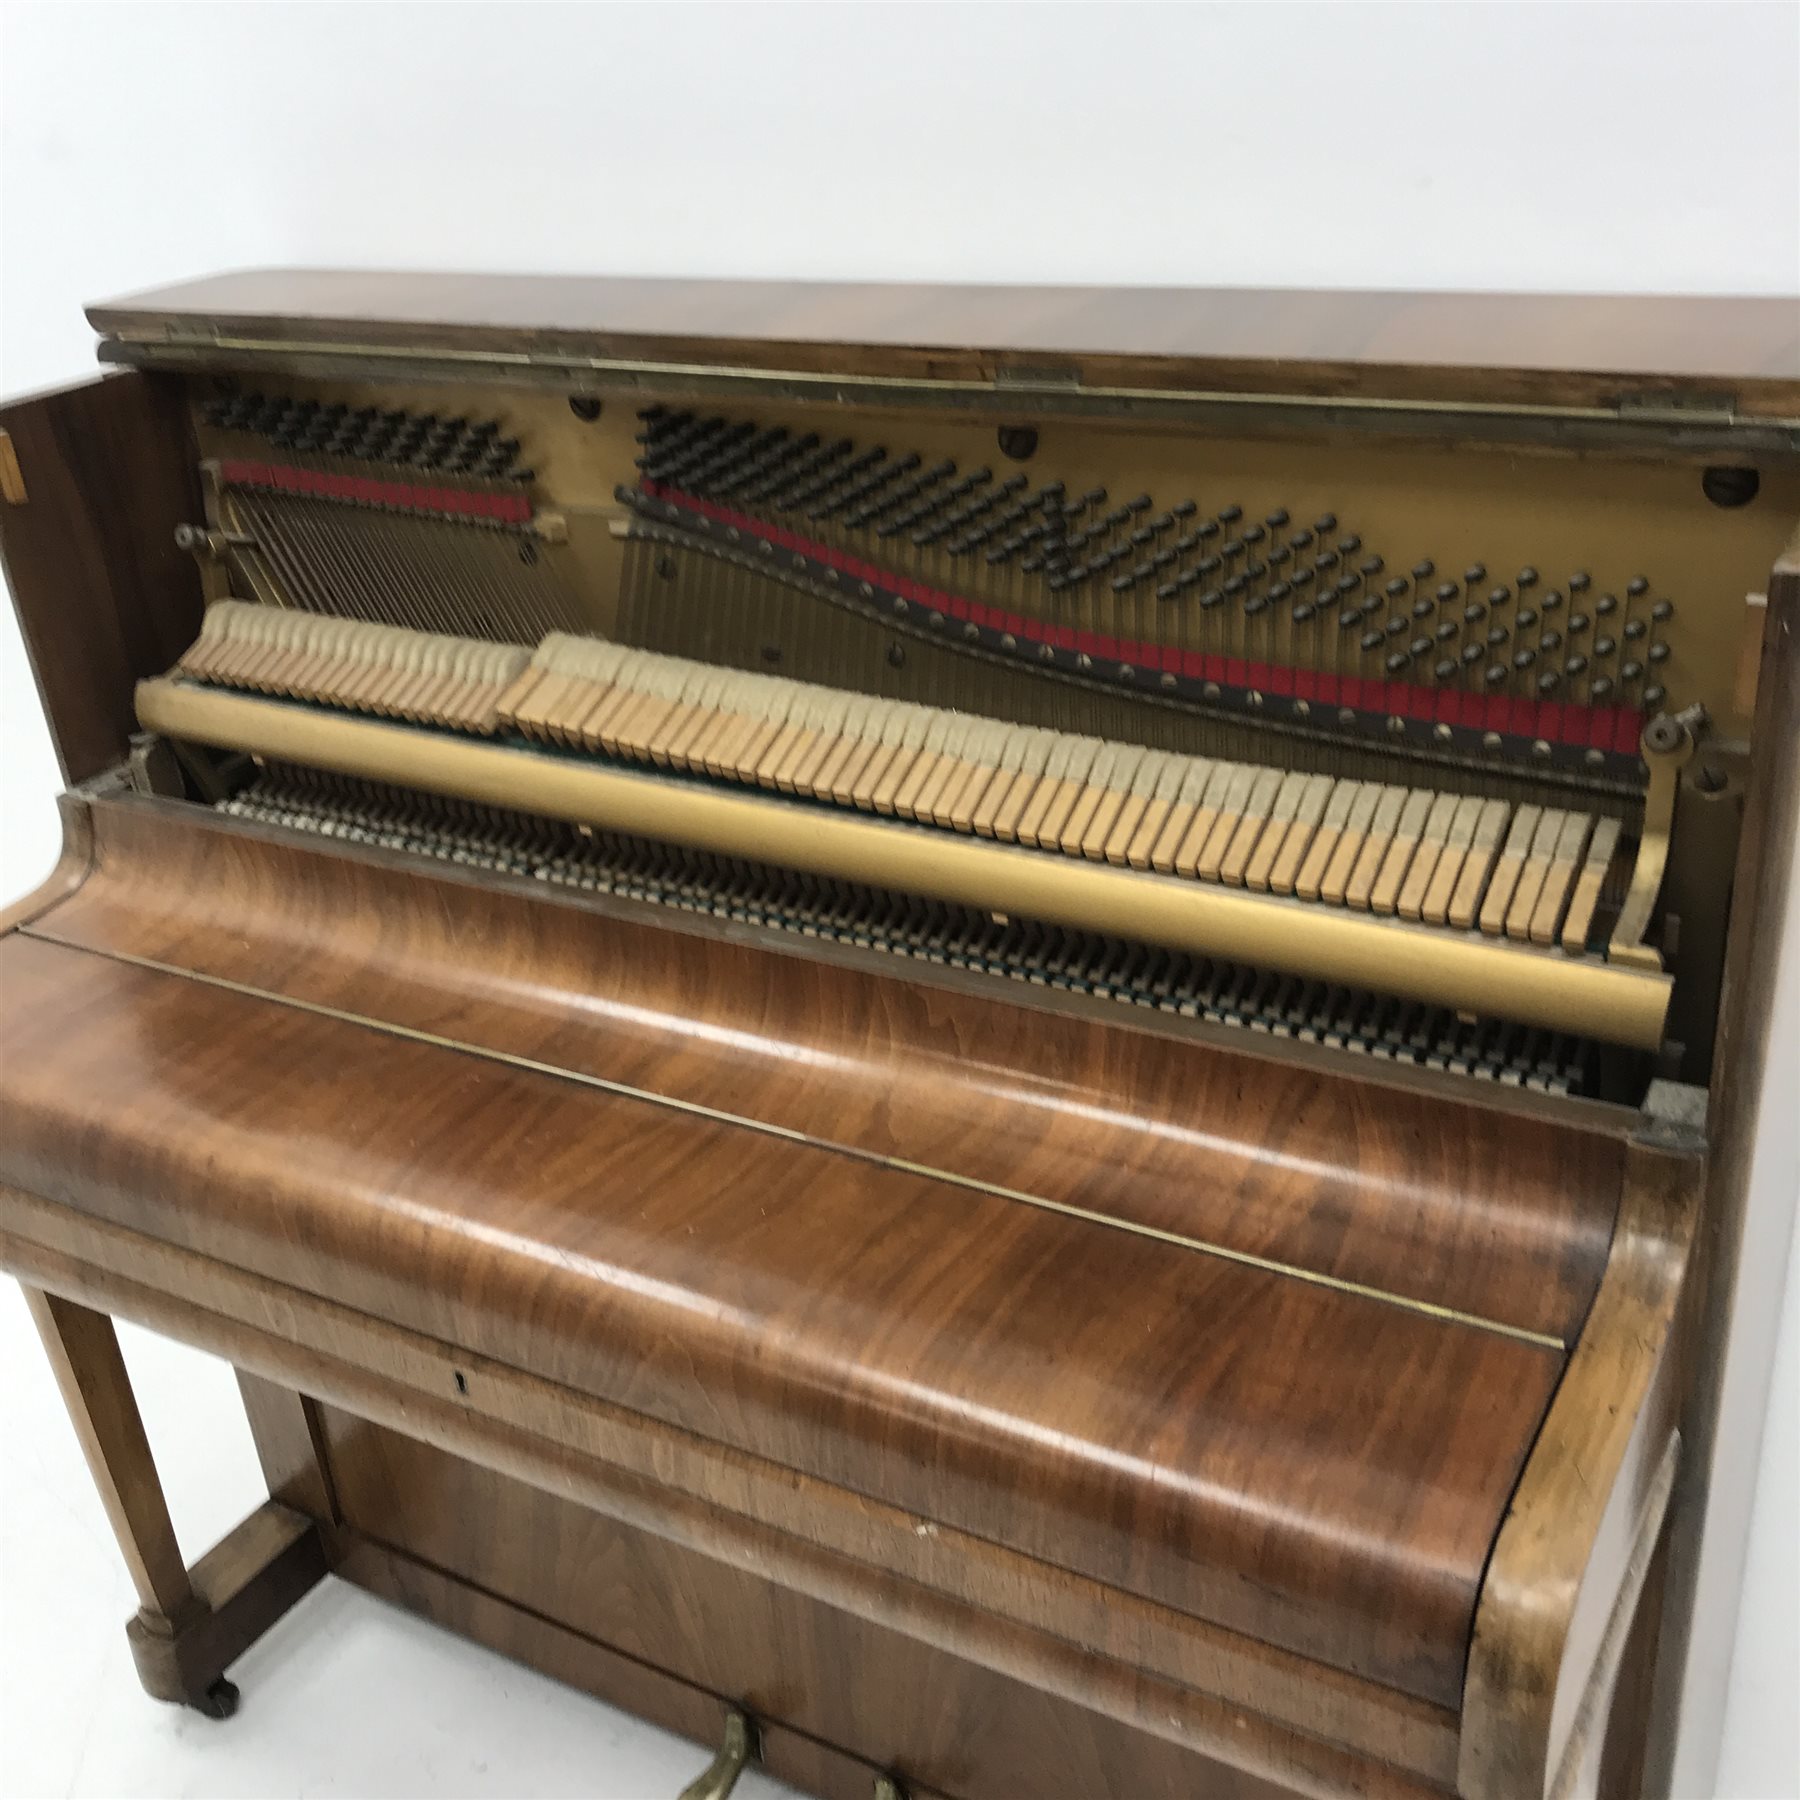 Godfrey walnut cased overstrung upright piano, W124cm, H113cm - Image 5 of 10